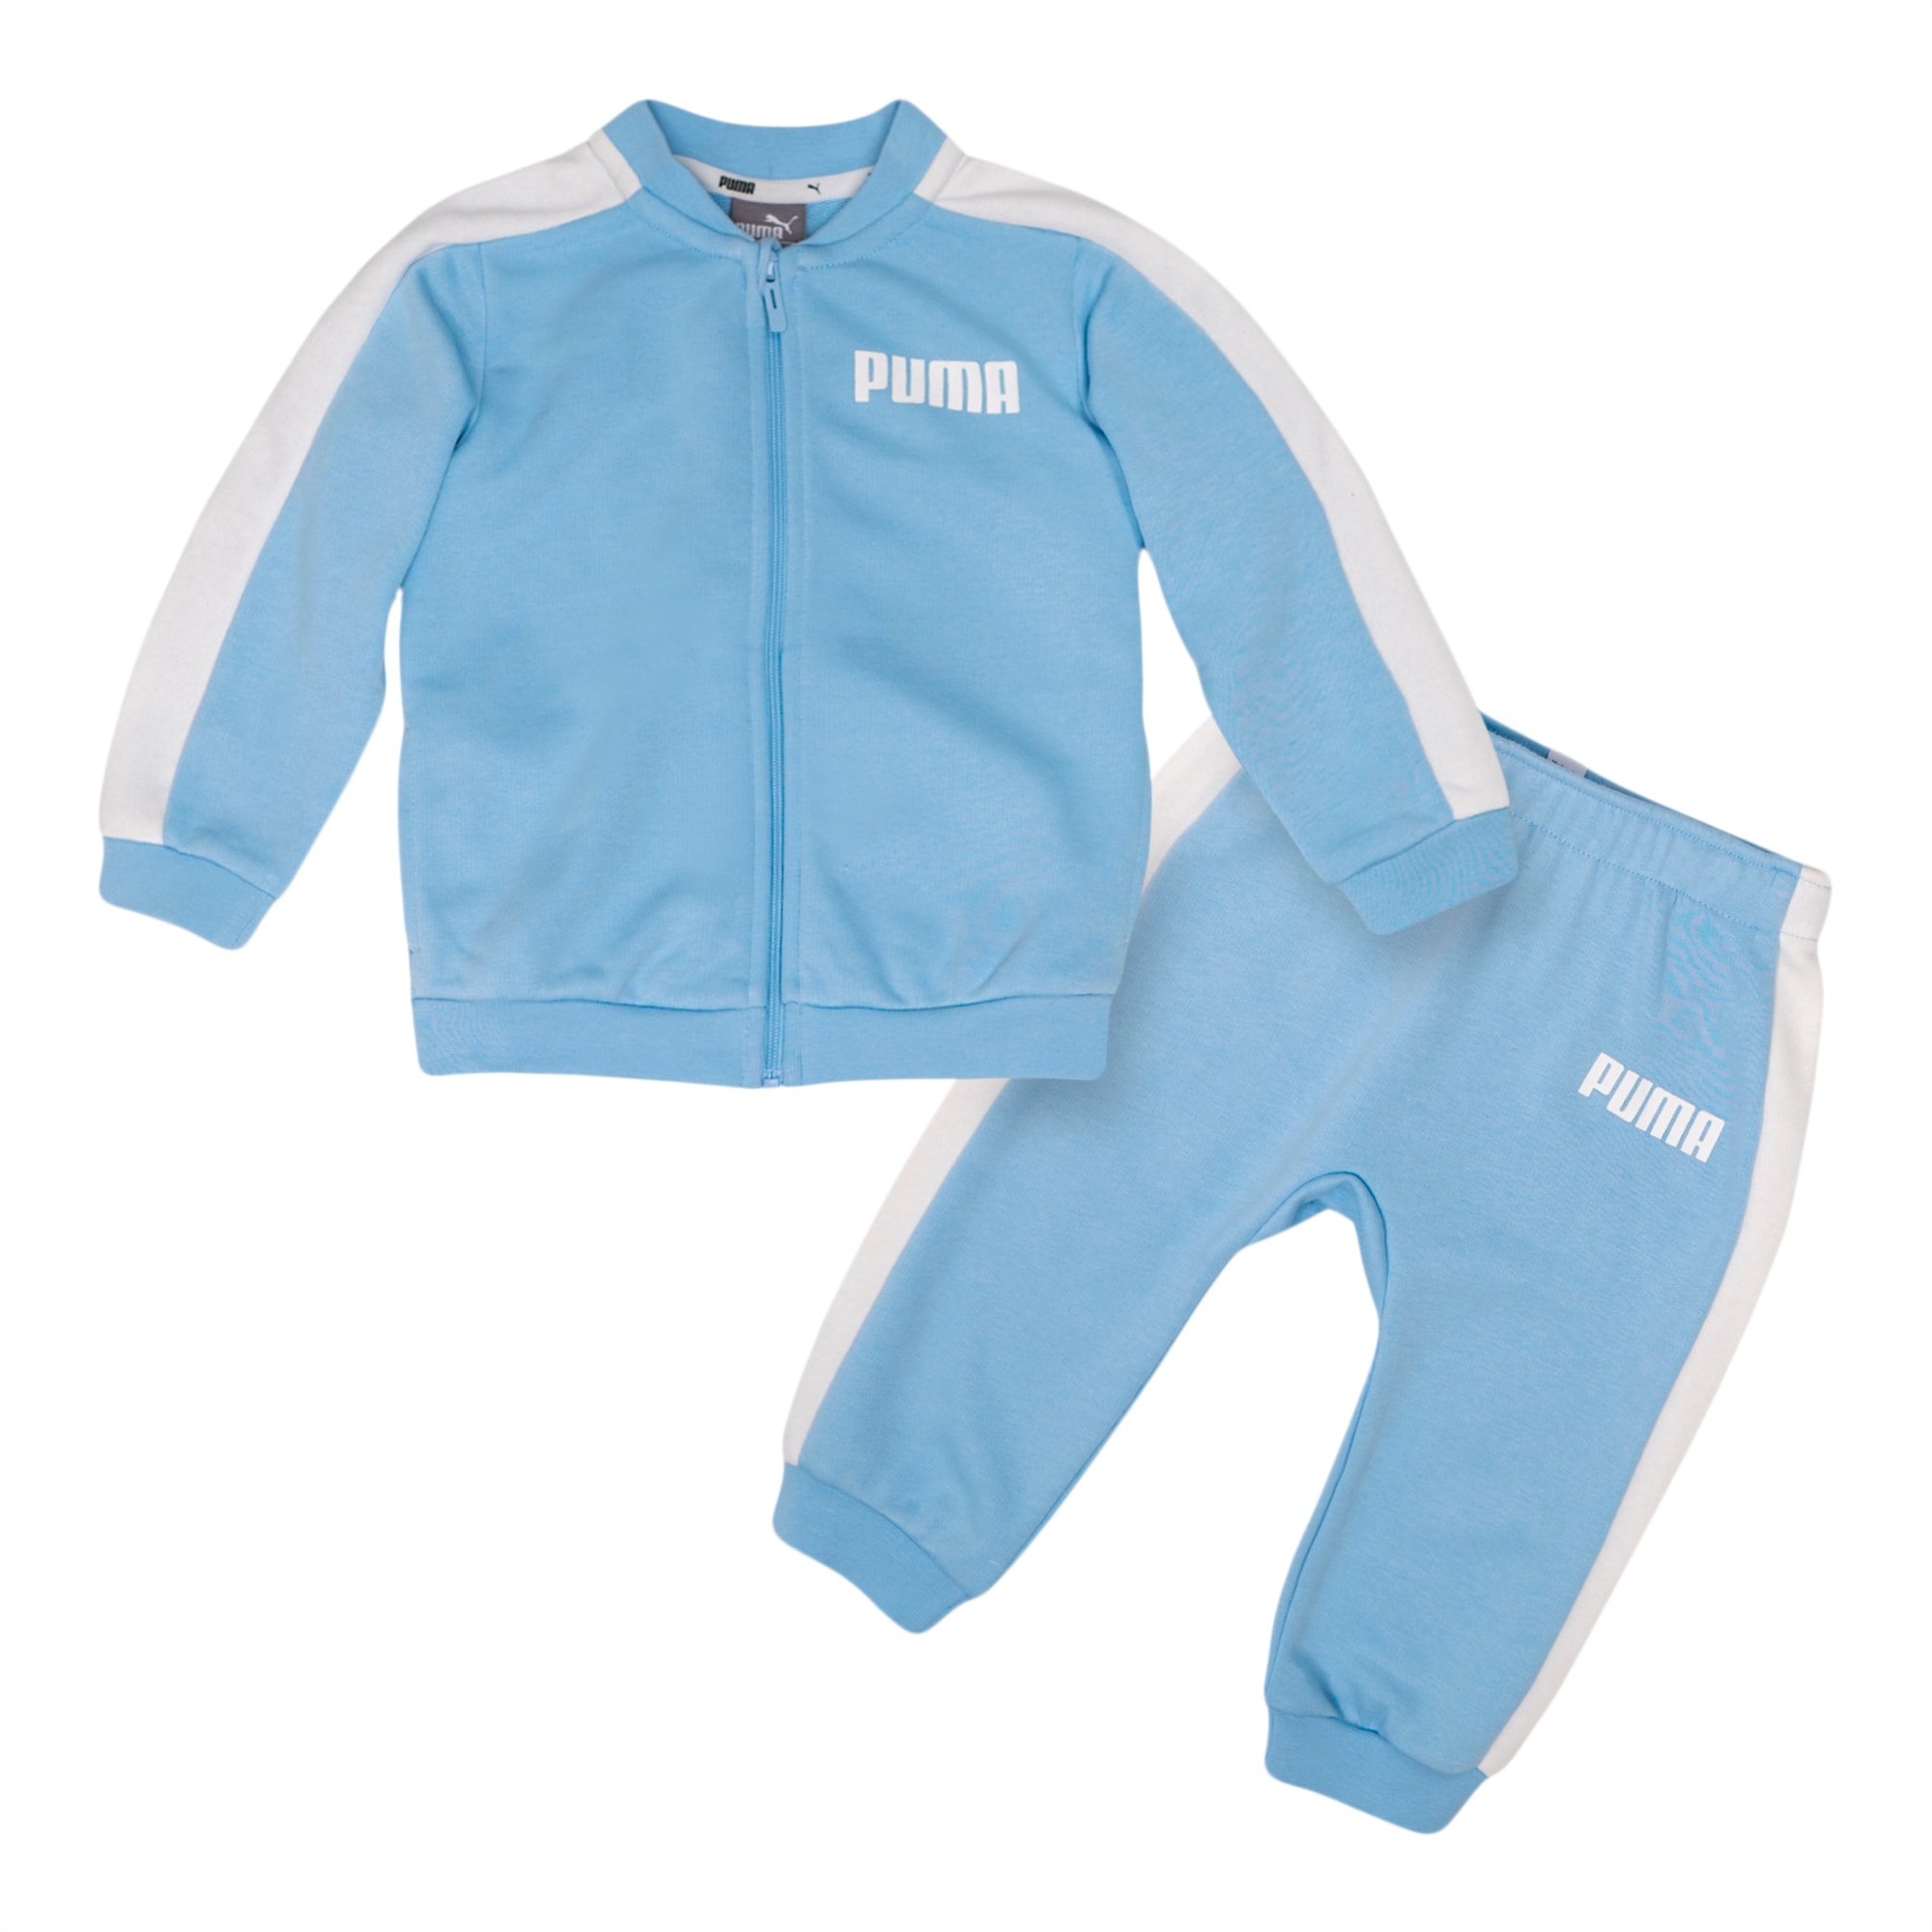 puma baby jogging suit